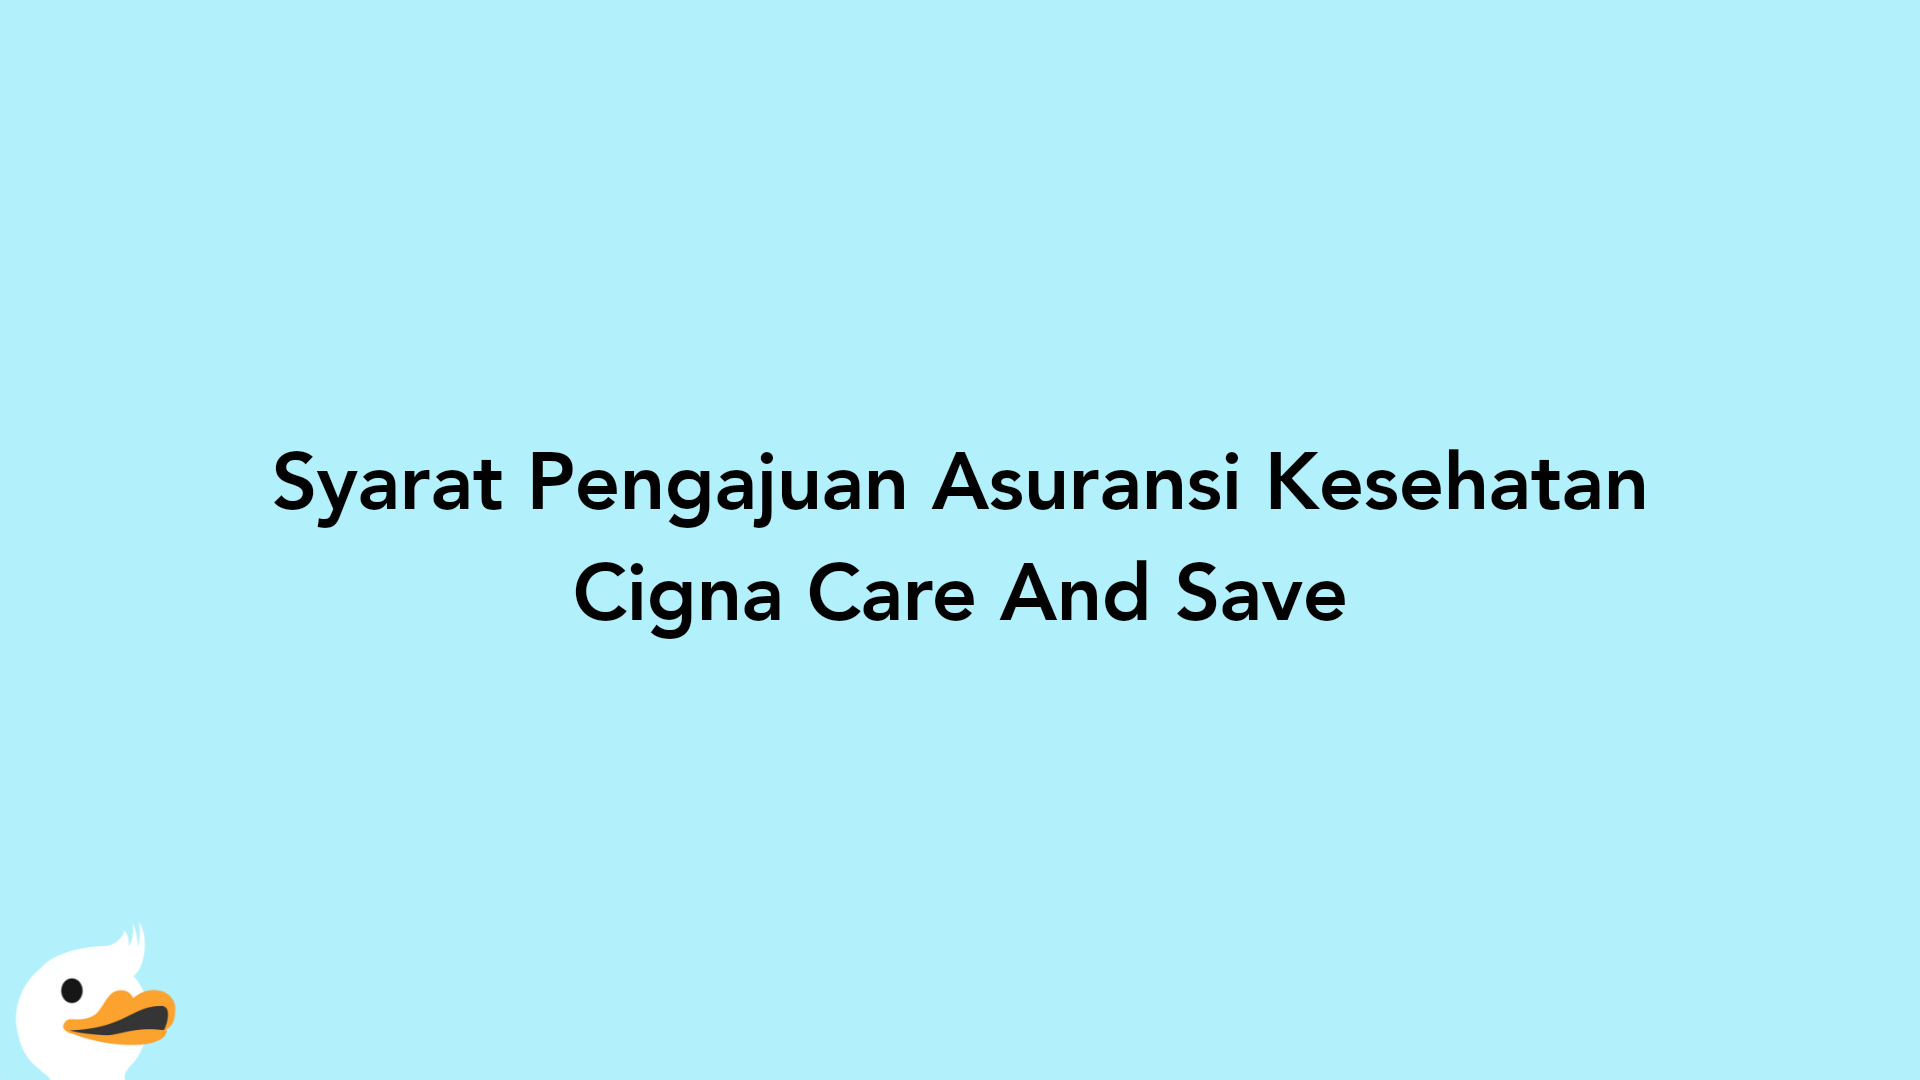 Syarat Pengajuan Asuransi Kesehatan Cigna Care And Save